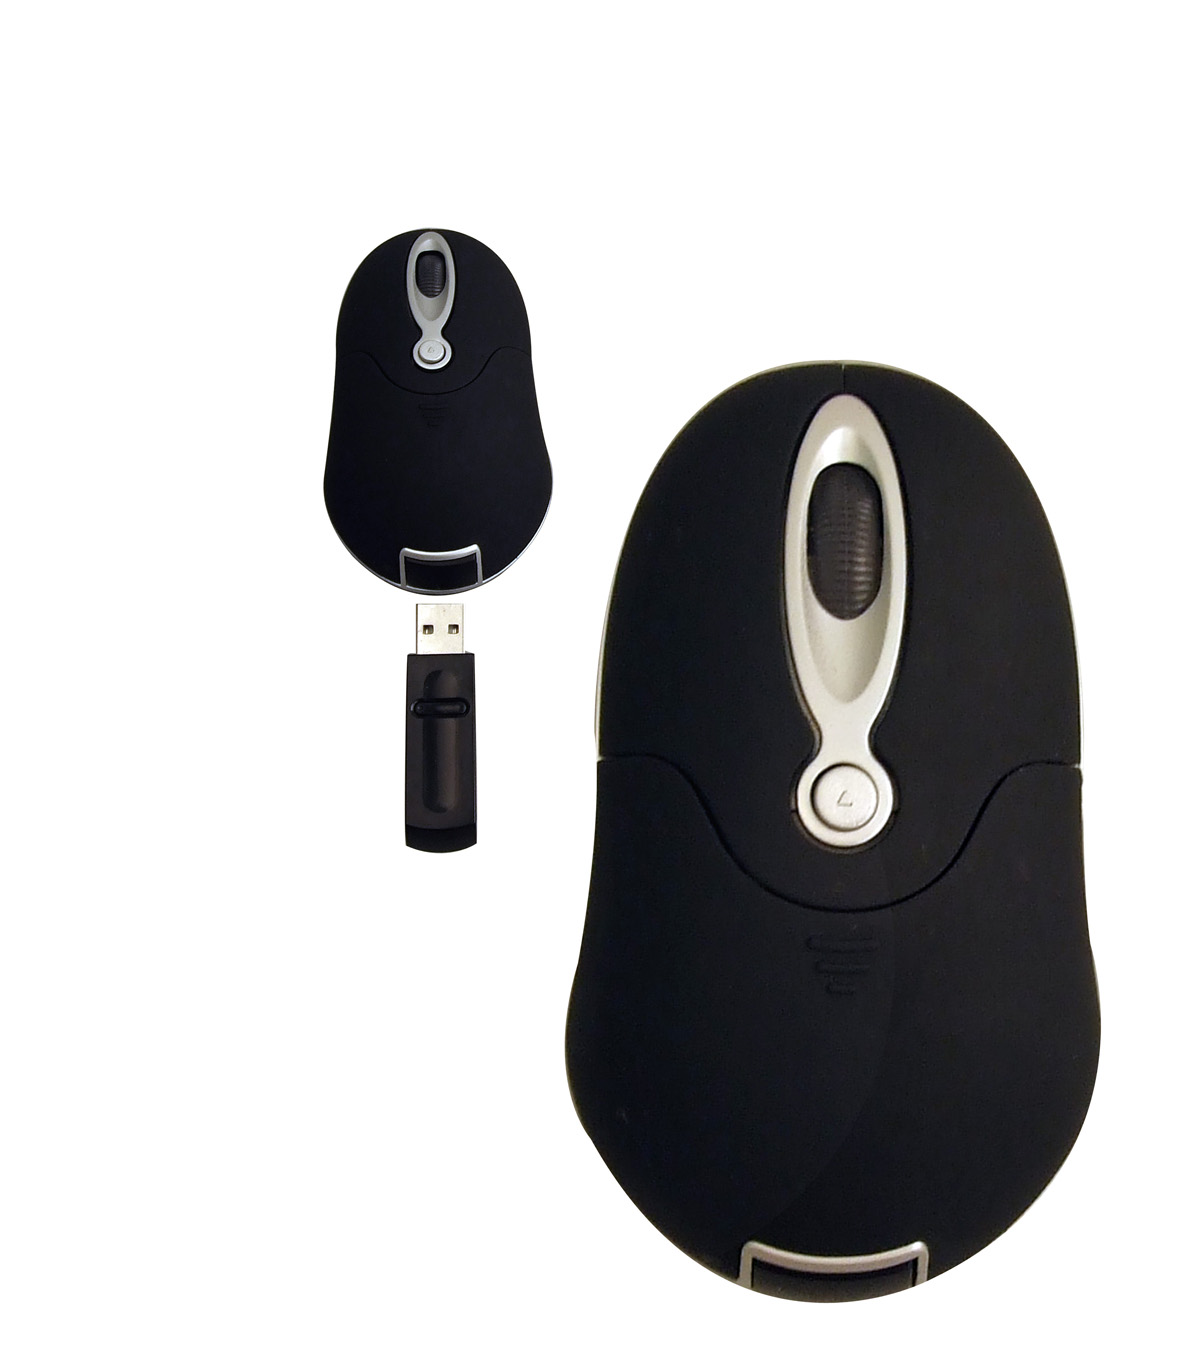 Black Wireless Mouse (9.5X4.5Cm)